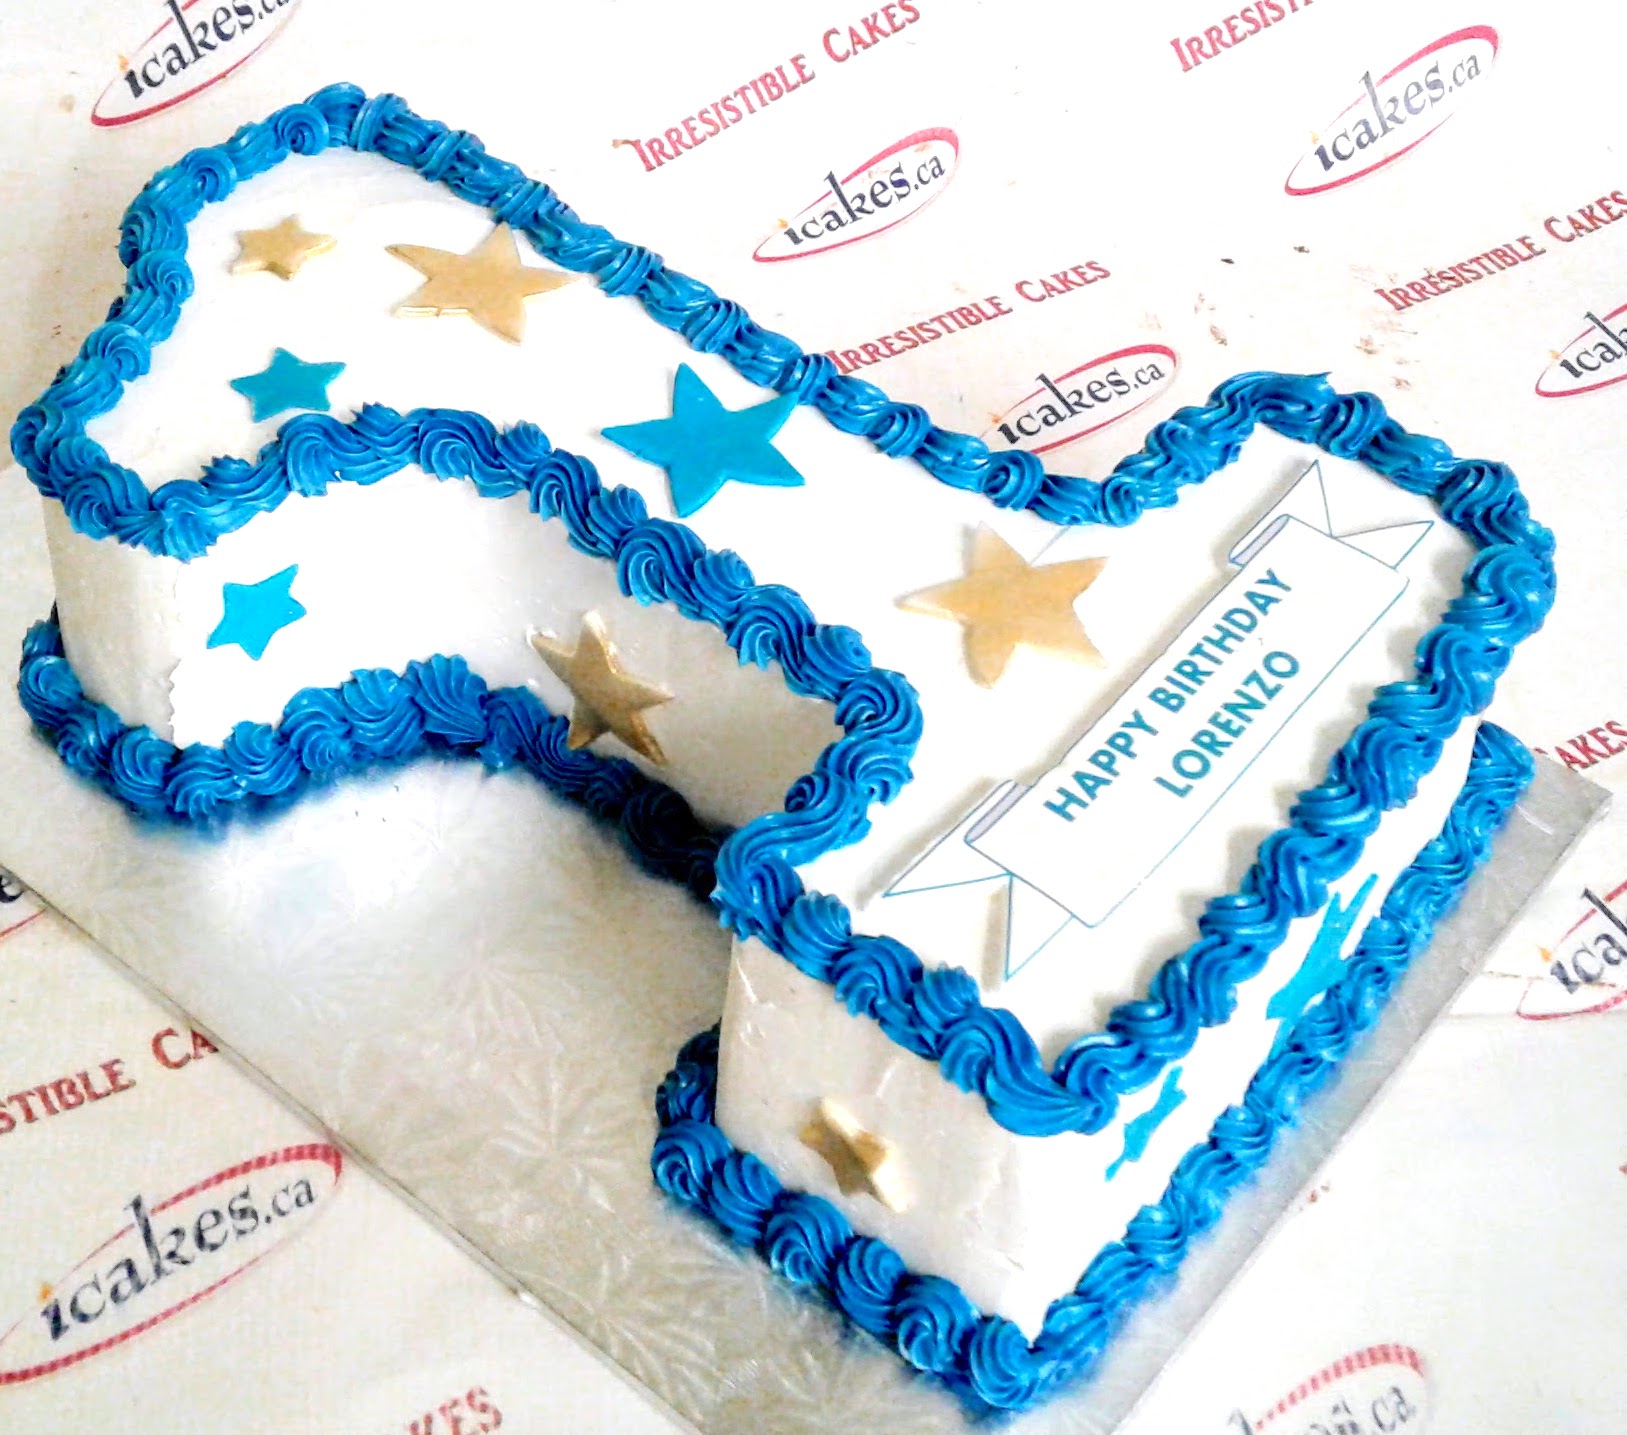 Cake Star in Etobicoke is a treat | News | toronto.com